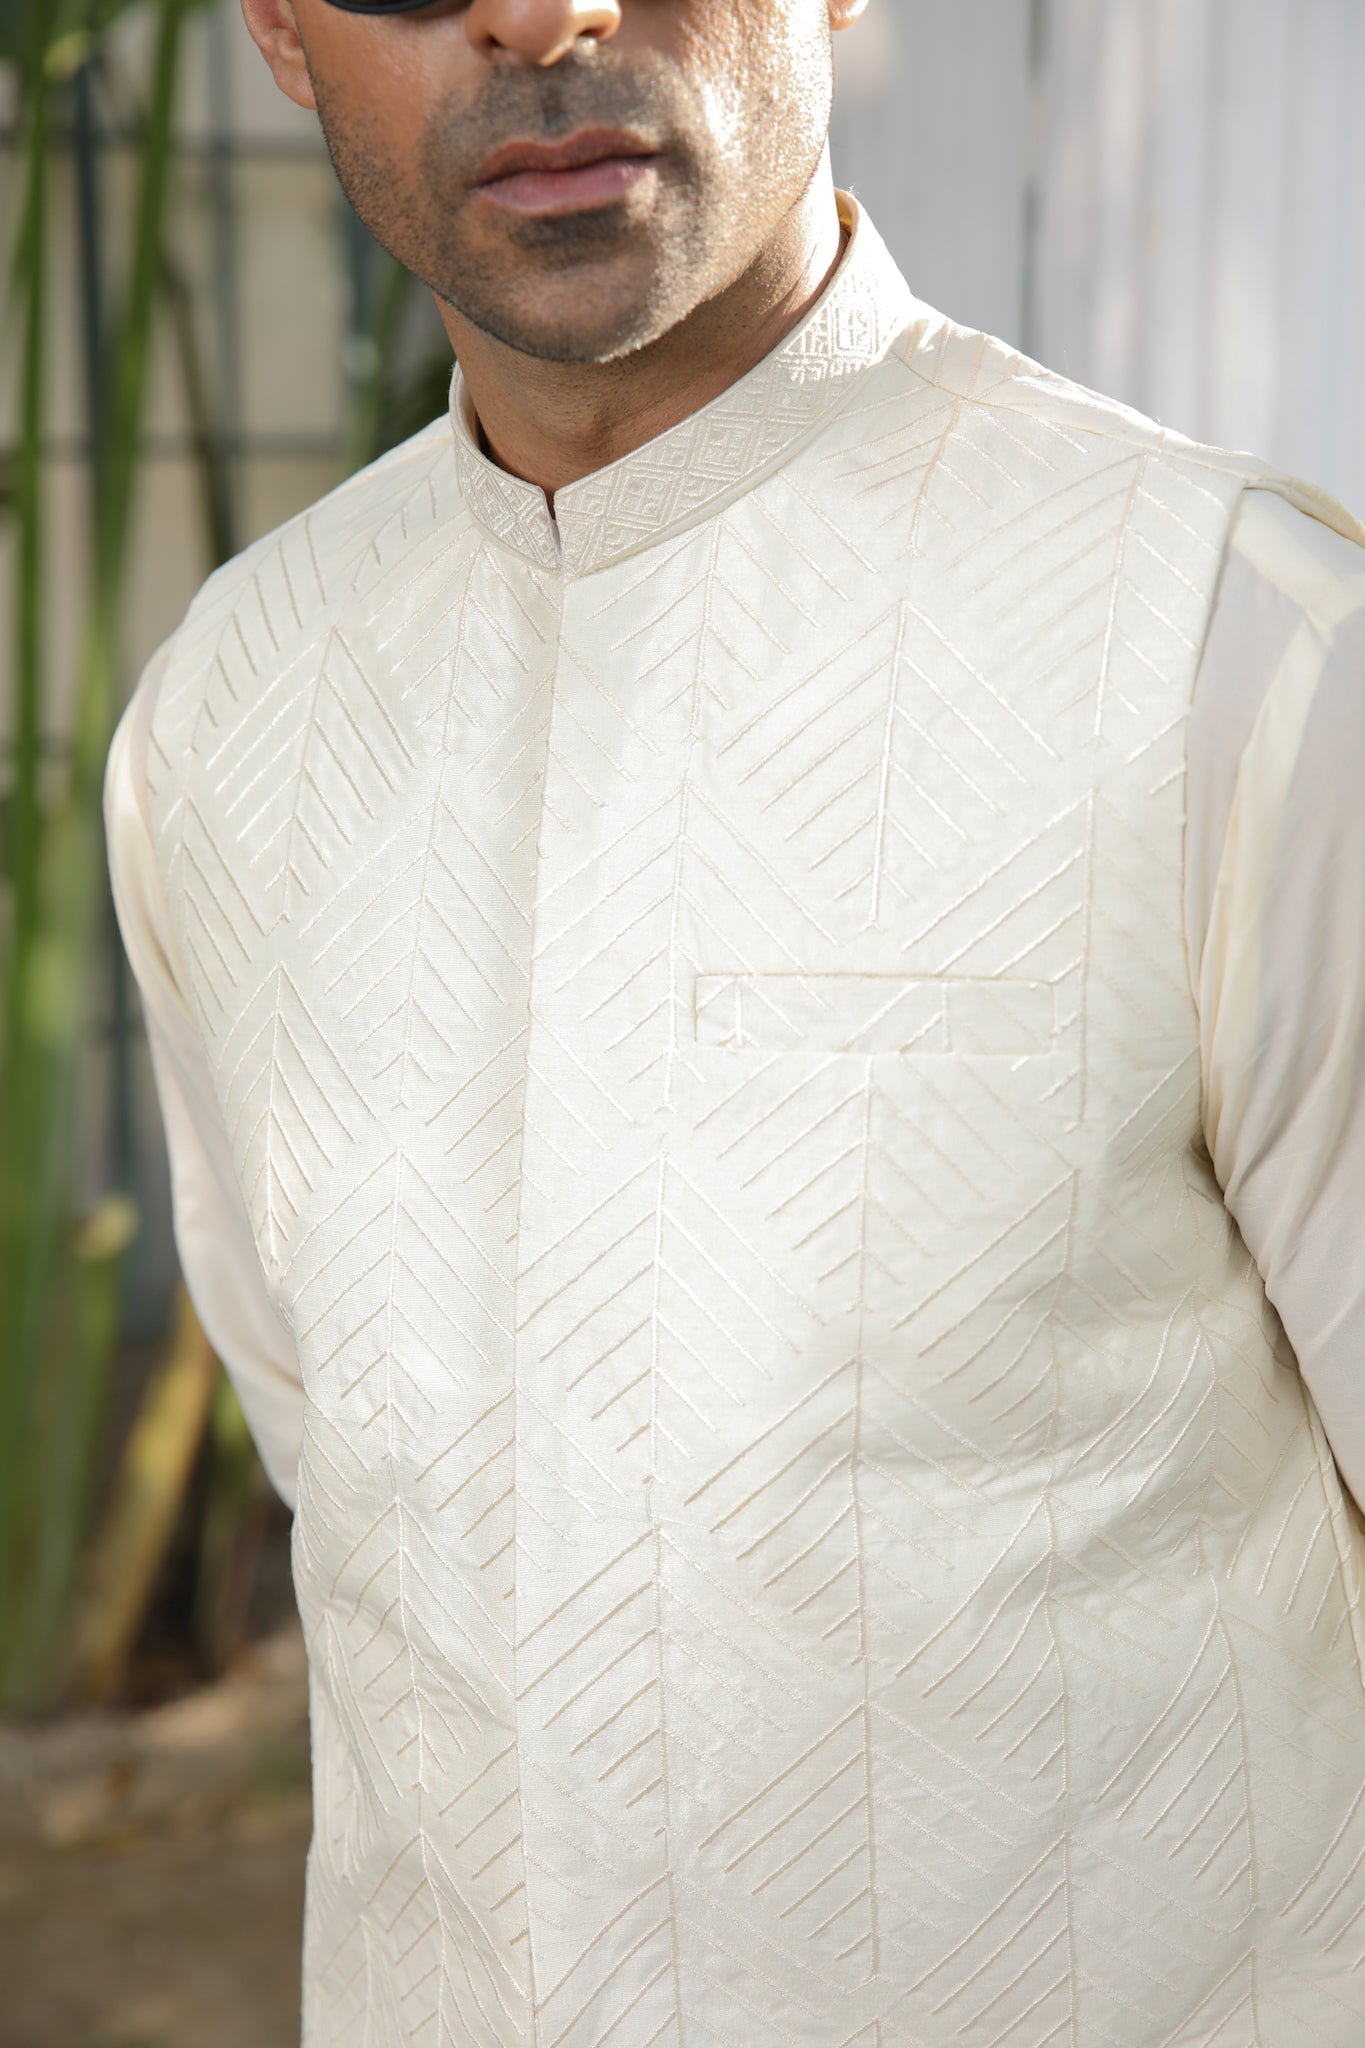 Bosky White Embroidered - Waistcoat Set - 3PC Designerwear